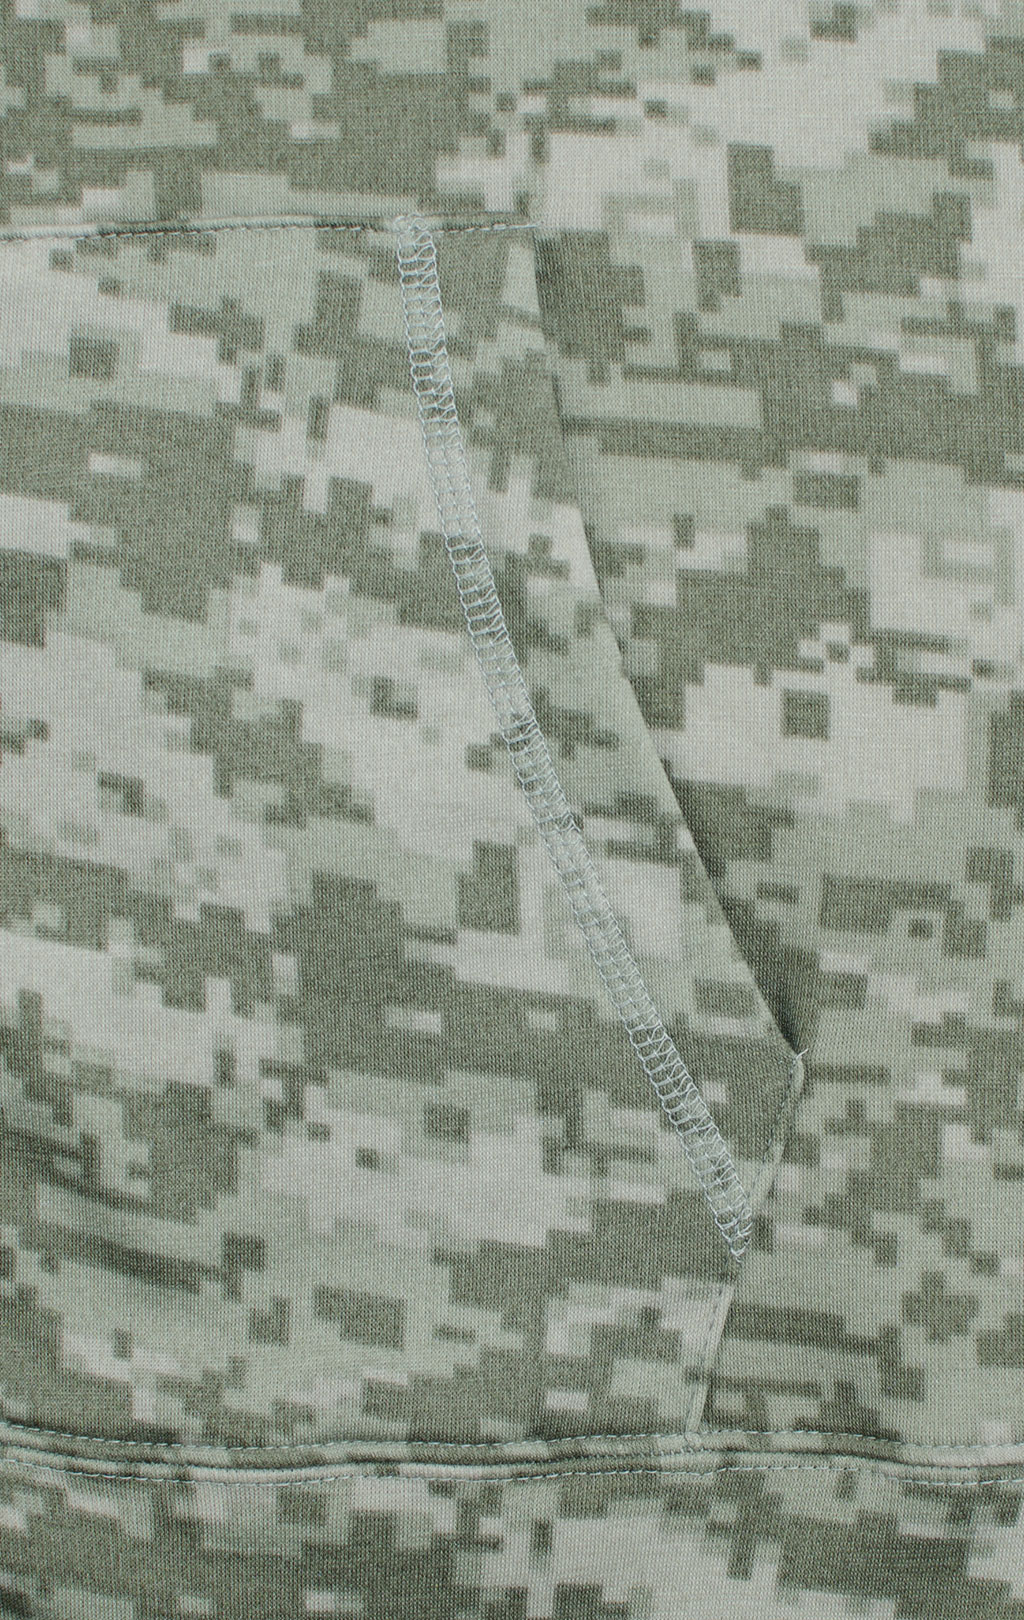 Толстовка US ARMY с капюшоном acu США